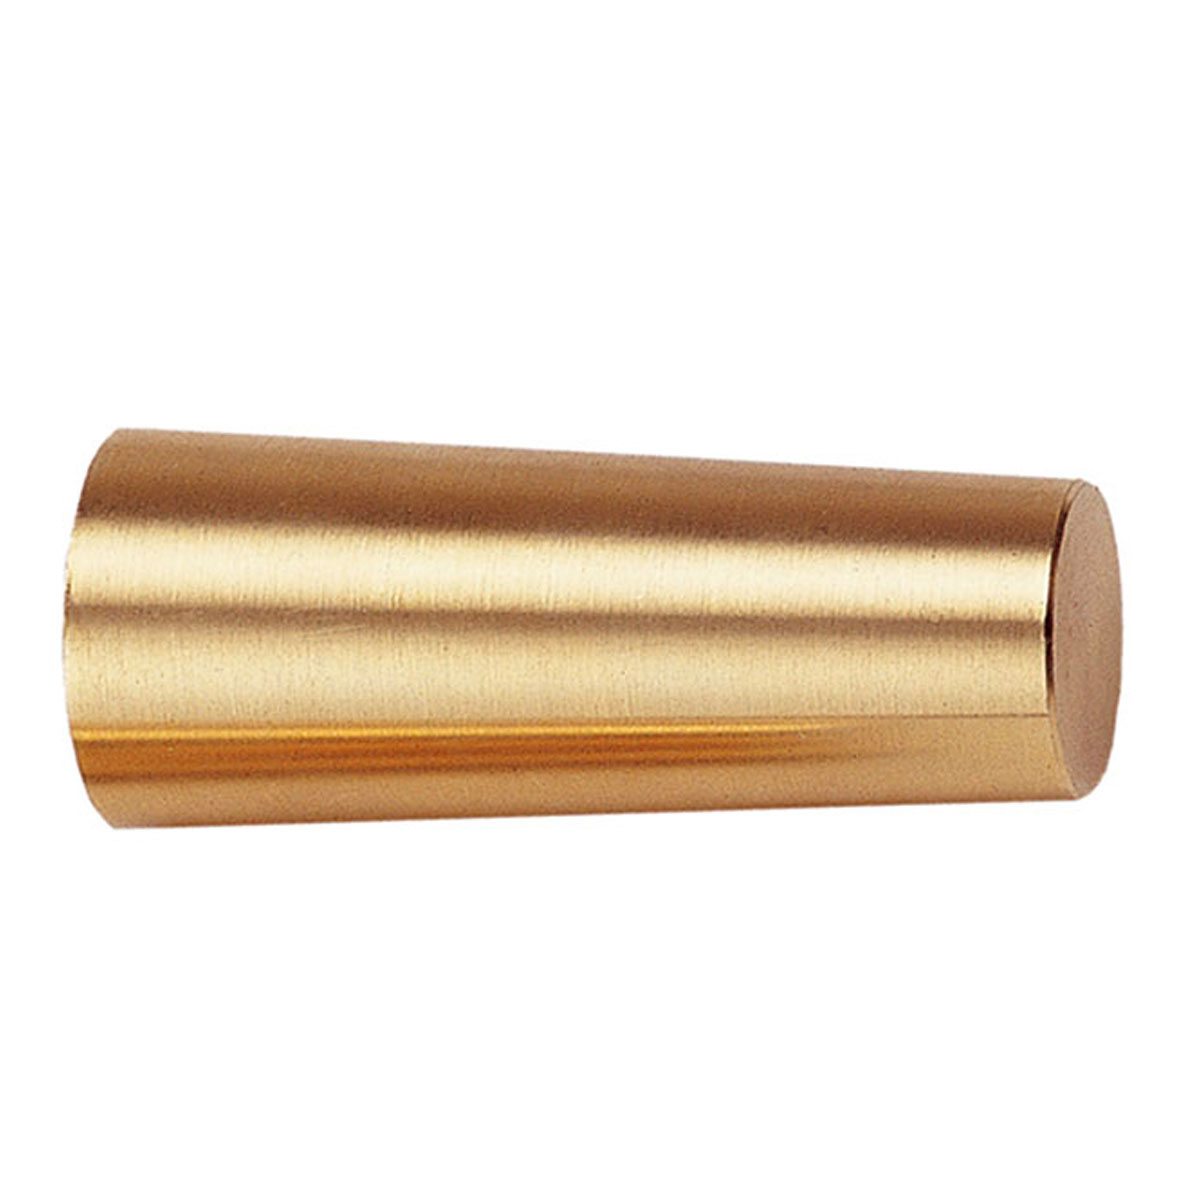 Brass Tube Plug For Tubes 15.9mm OD & BWG 15-22